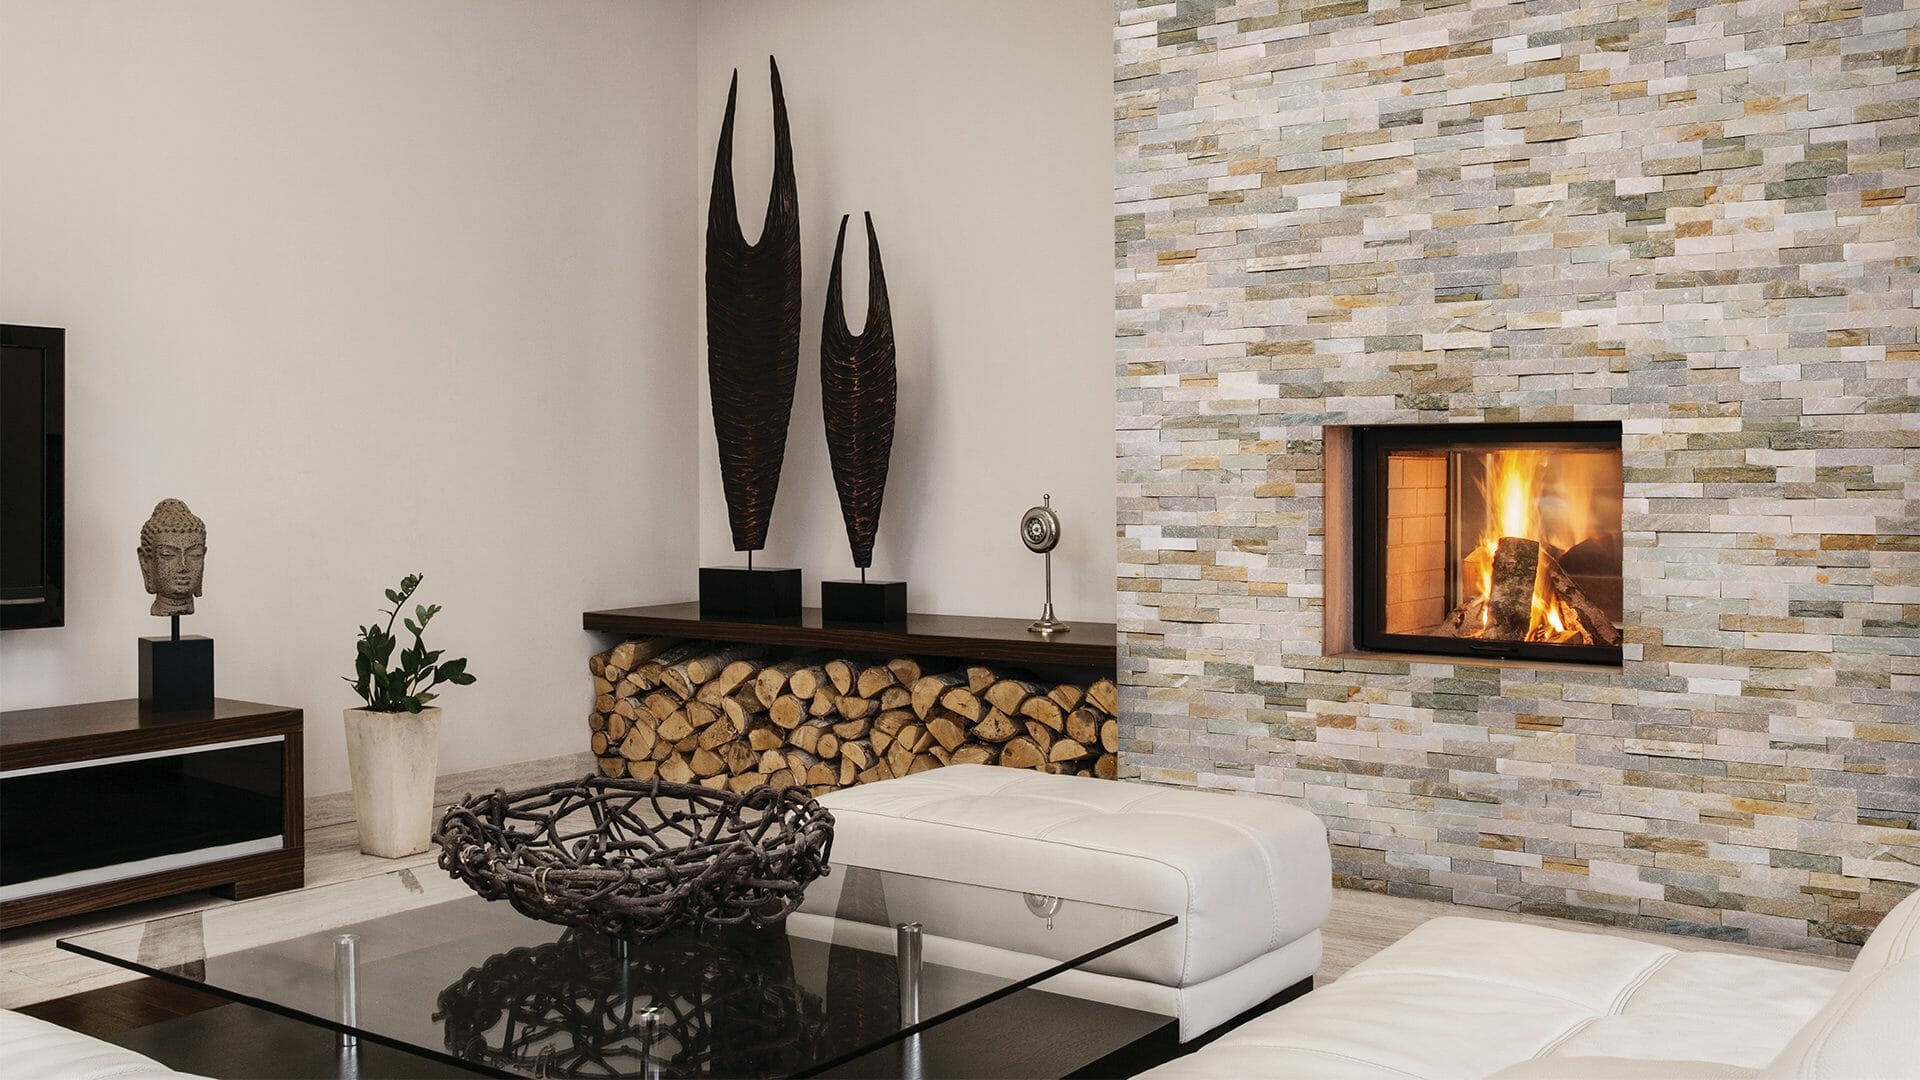 Fireplace - Design Tiles by Zumpano